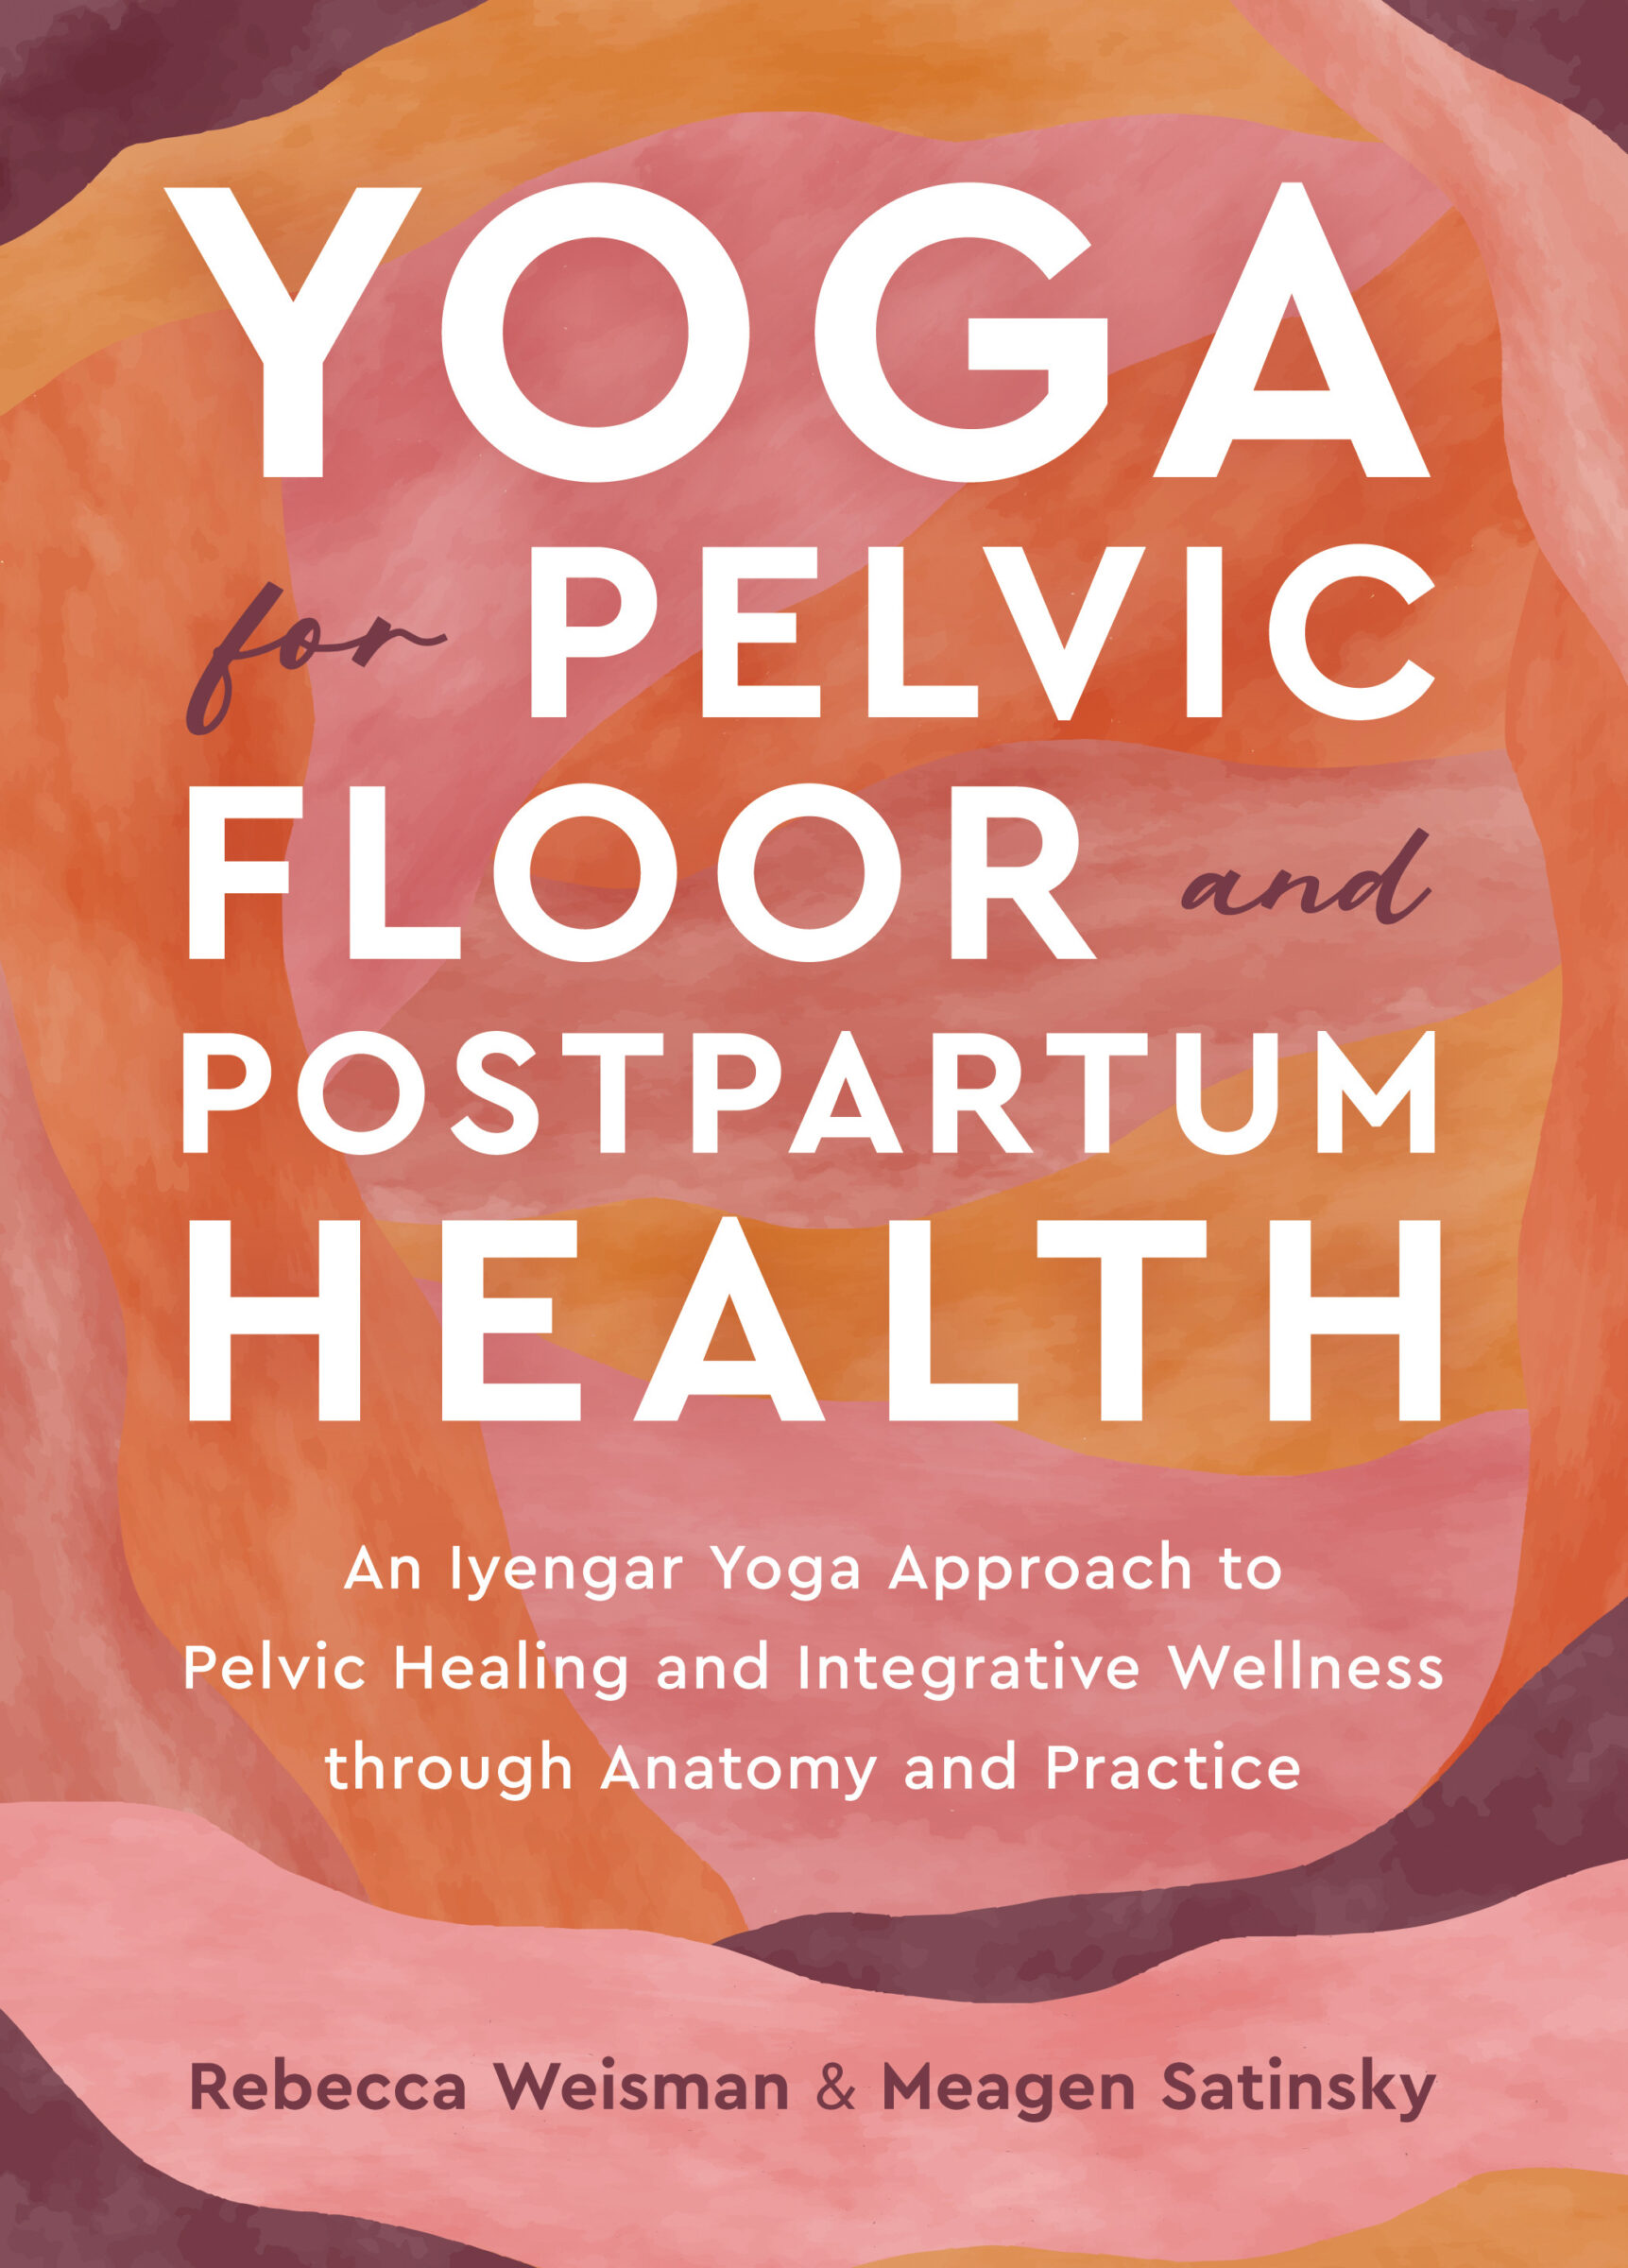 Teaching Yoga: Essential Foundations and Techniques (English Edition) eBook  : Stephens, Mark, Mariel Hemmingway: : Kindle-Shop